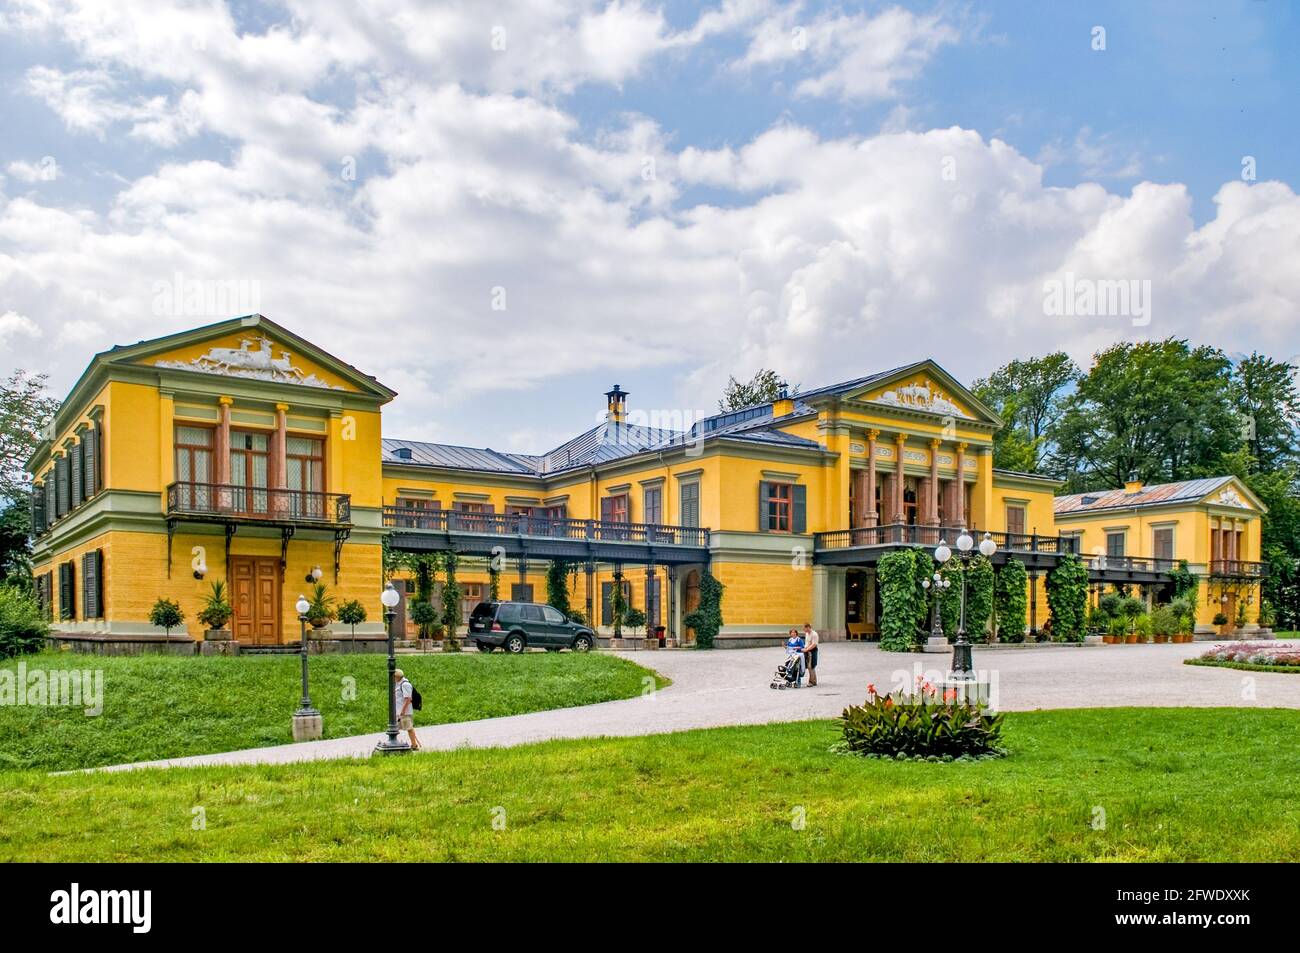 Kaiser Villa, Bad Ischl, Austria Foto de stock